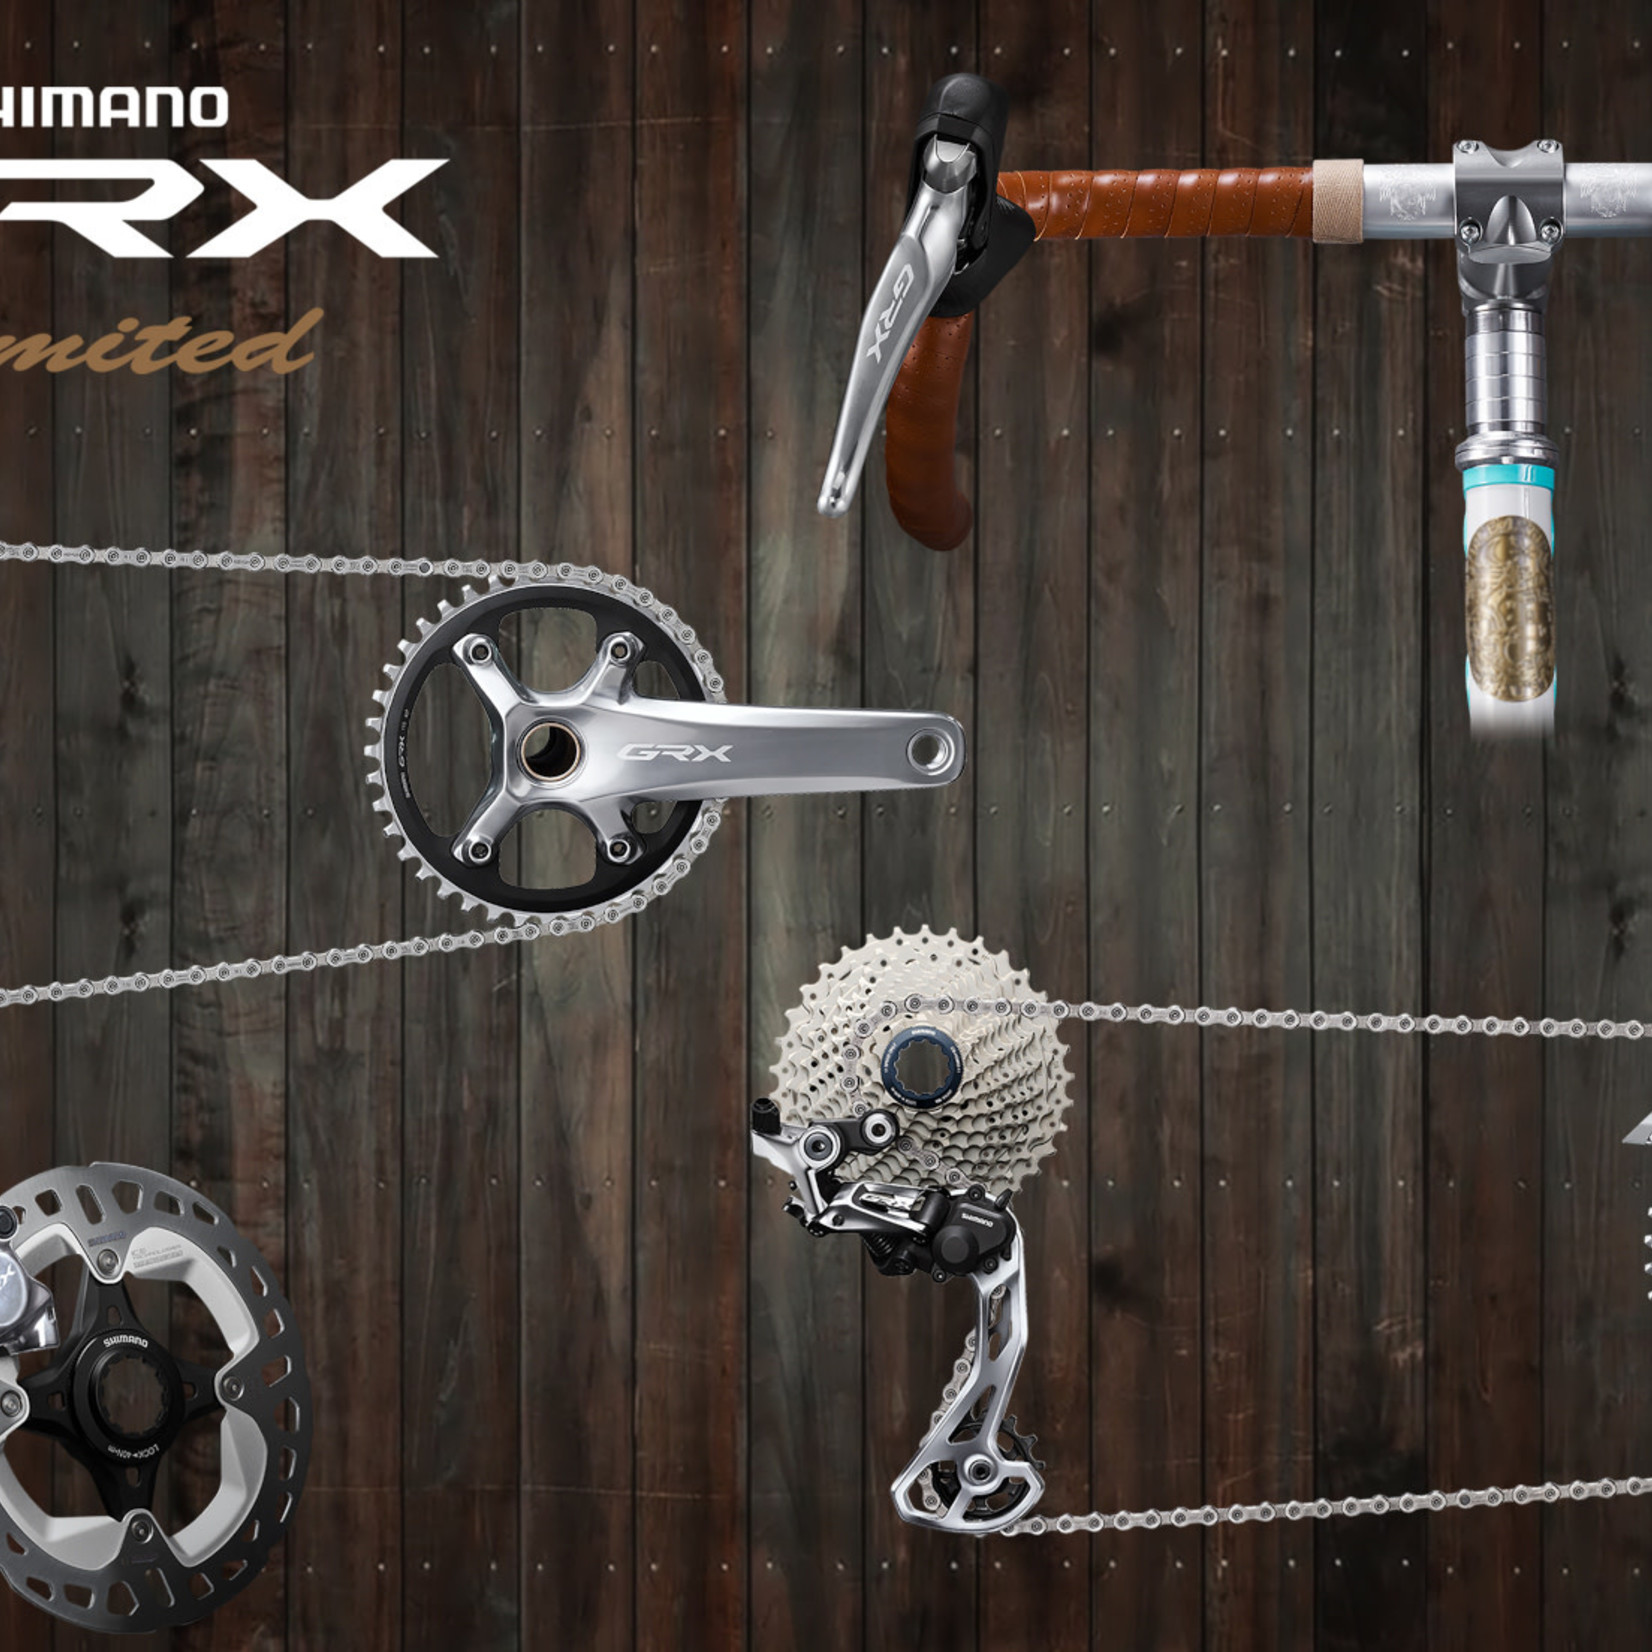 Shimano Shimano - Group Set - GRX 800 2x - Limited Kit